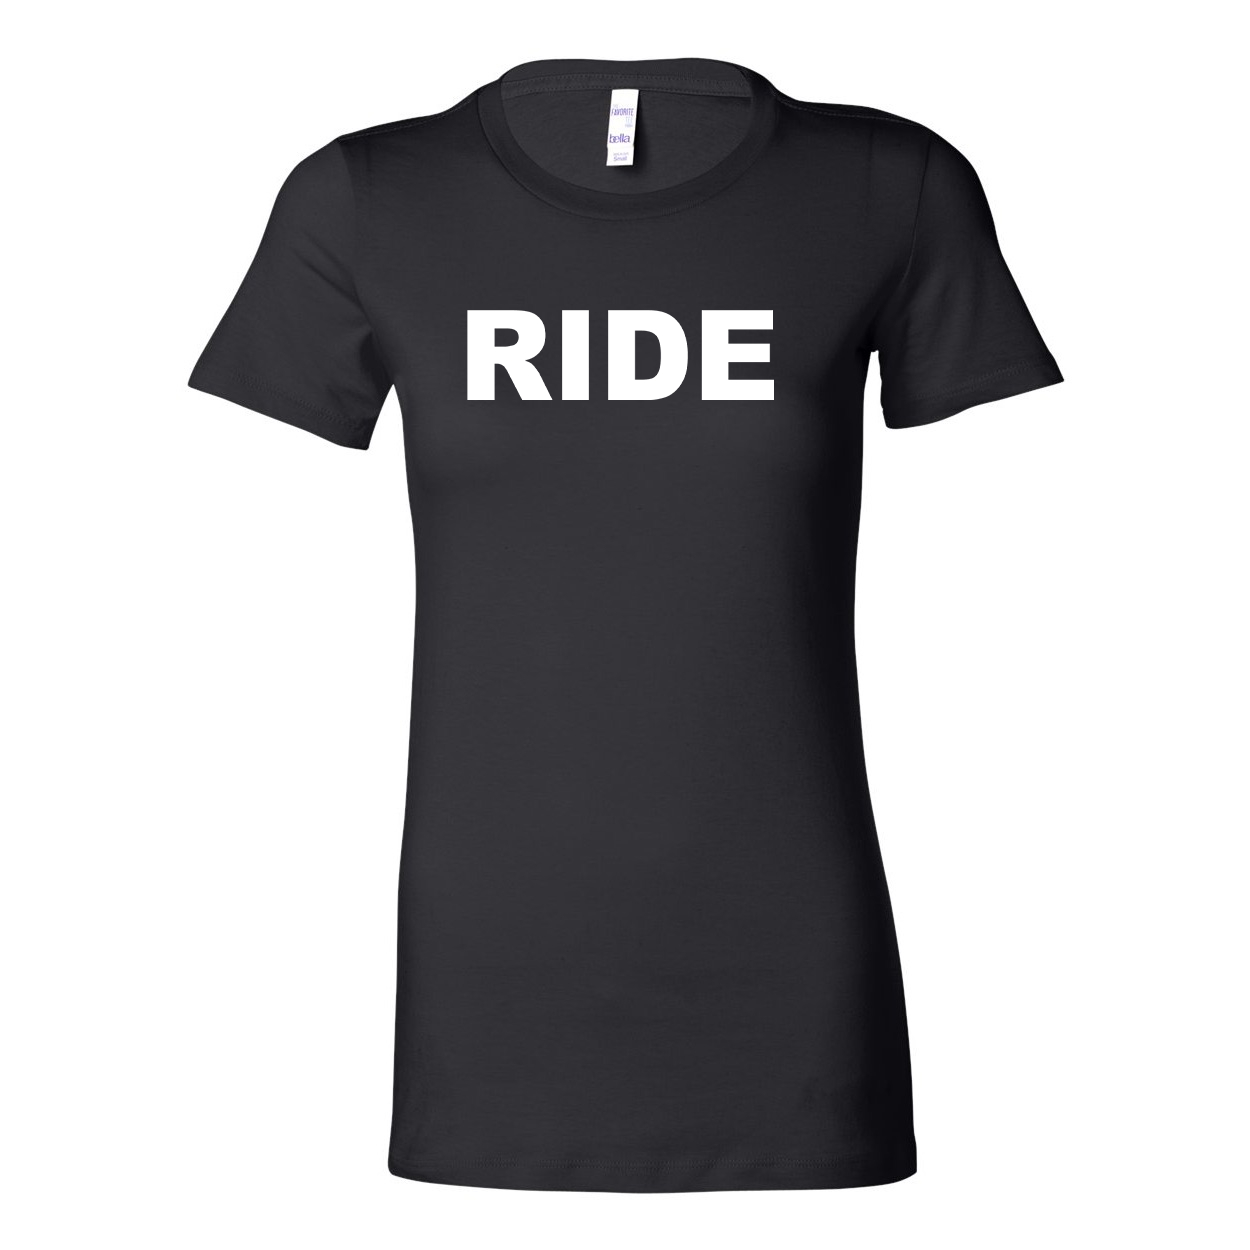 Ride Brand Logo Classic Women's Fitted Tri-Blend T-Shirt Black (White Logo)